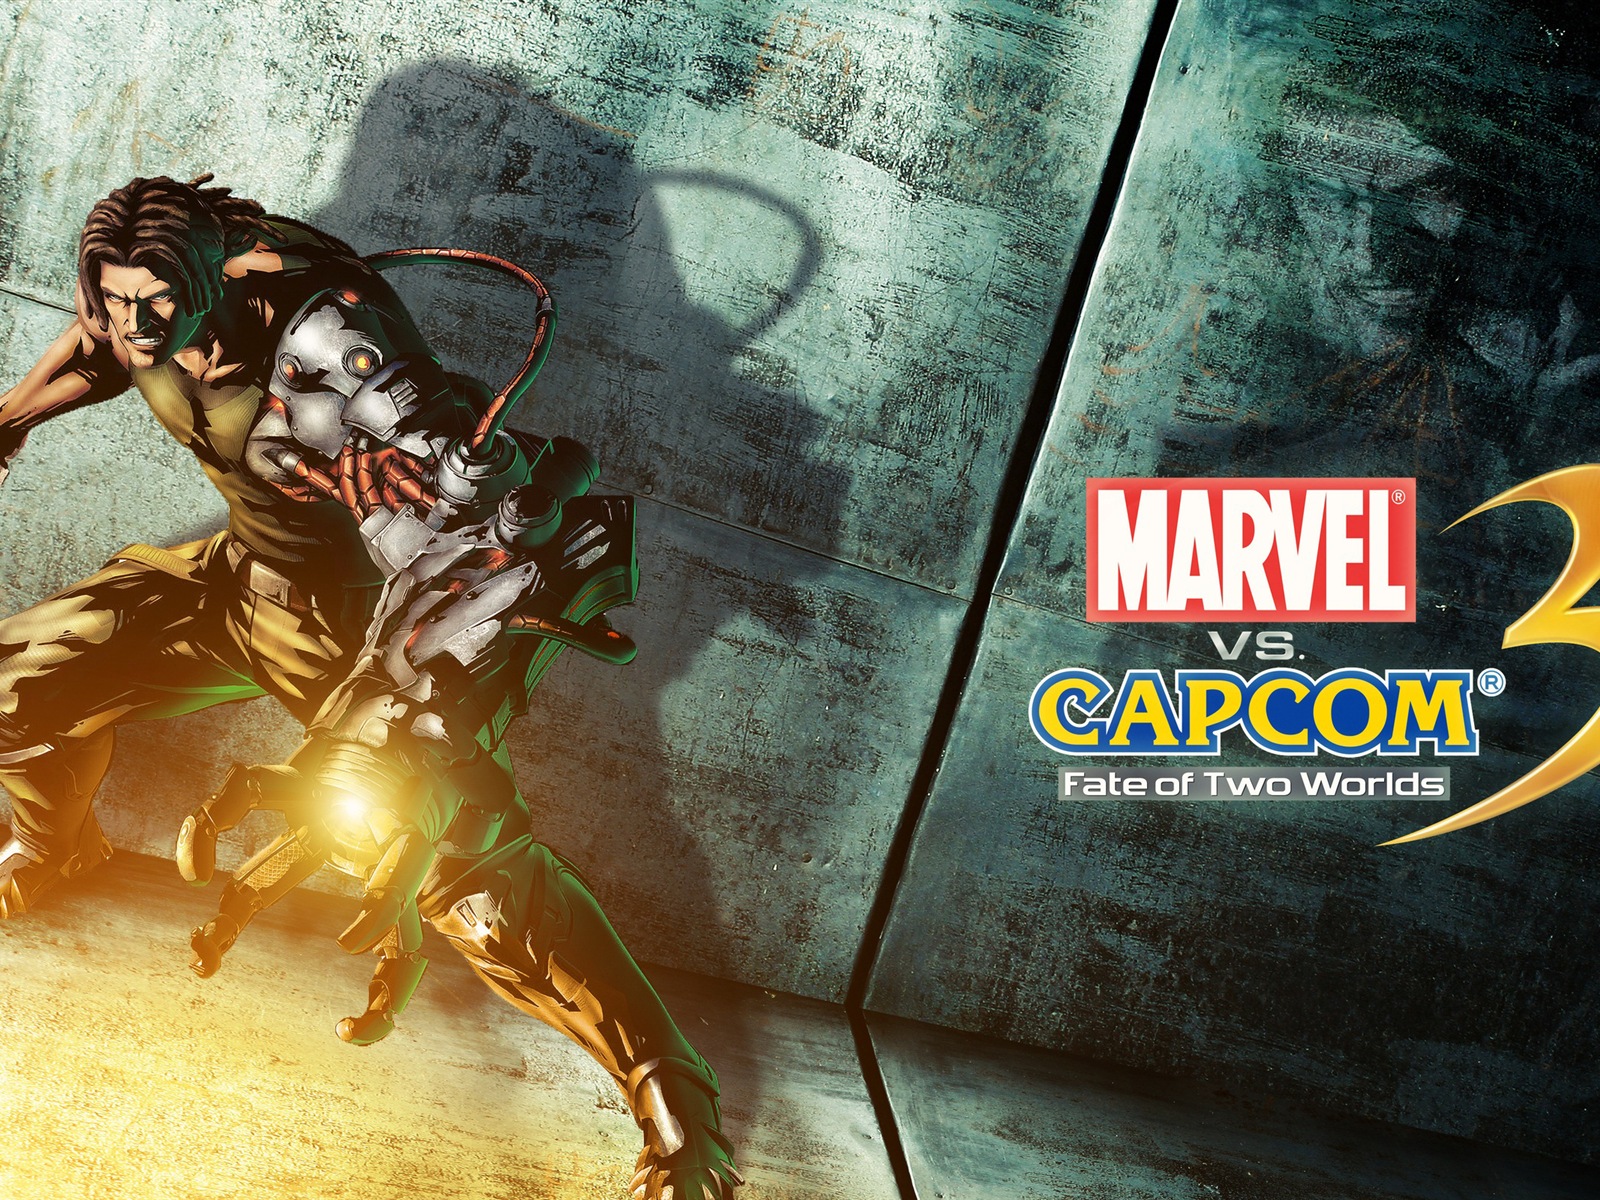 Marvel VS. Capcom 3: Fate of Two Worlds 漫画英雄VS.卡普空3 高清游戏壁纸8 - 1600x1200